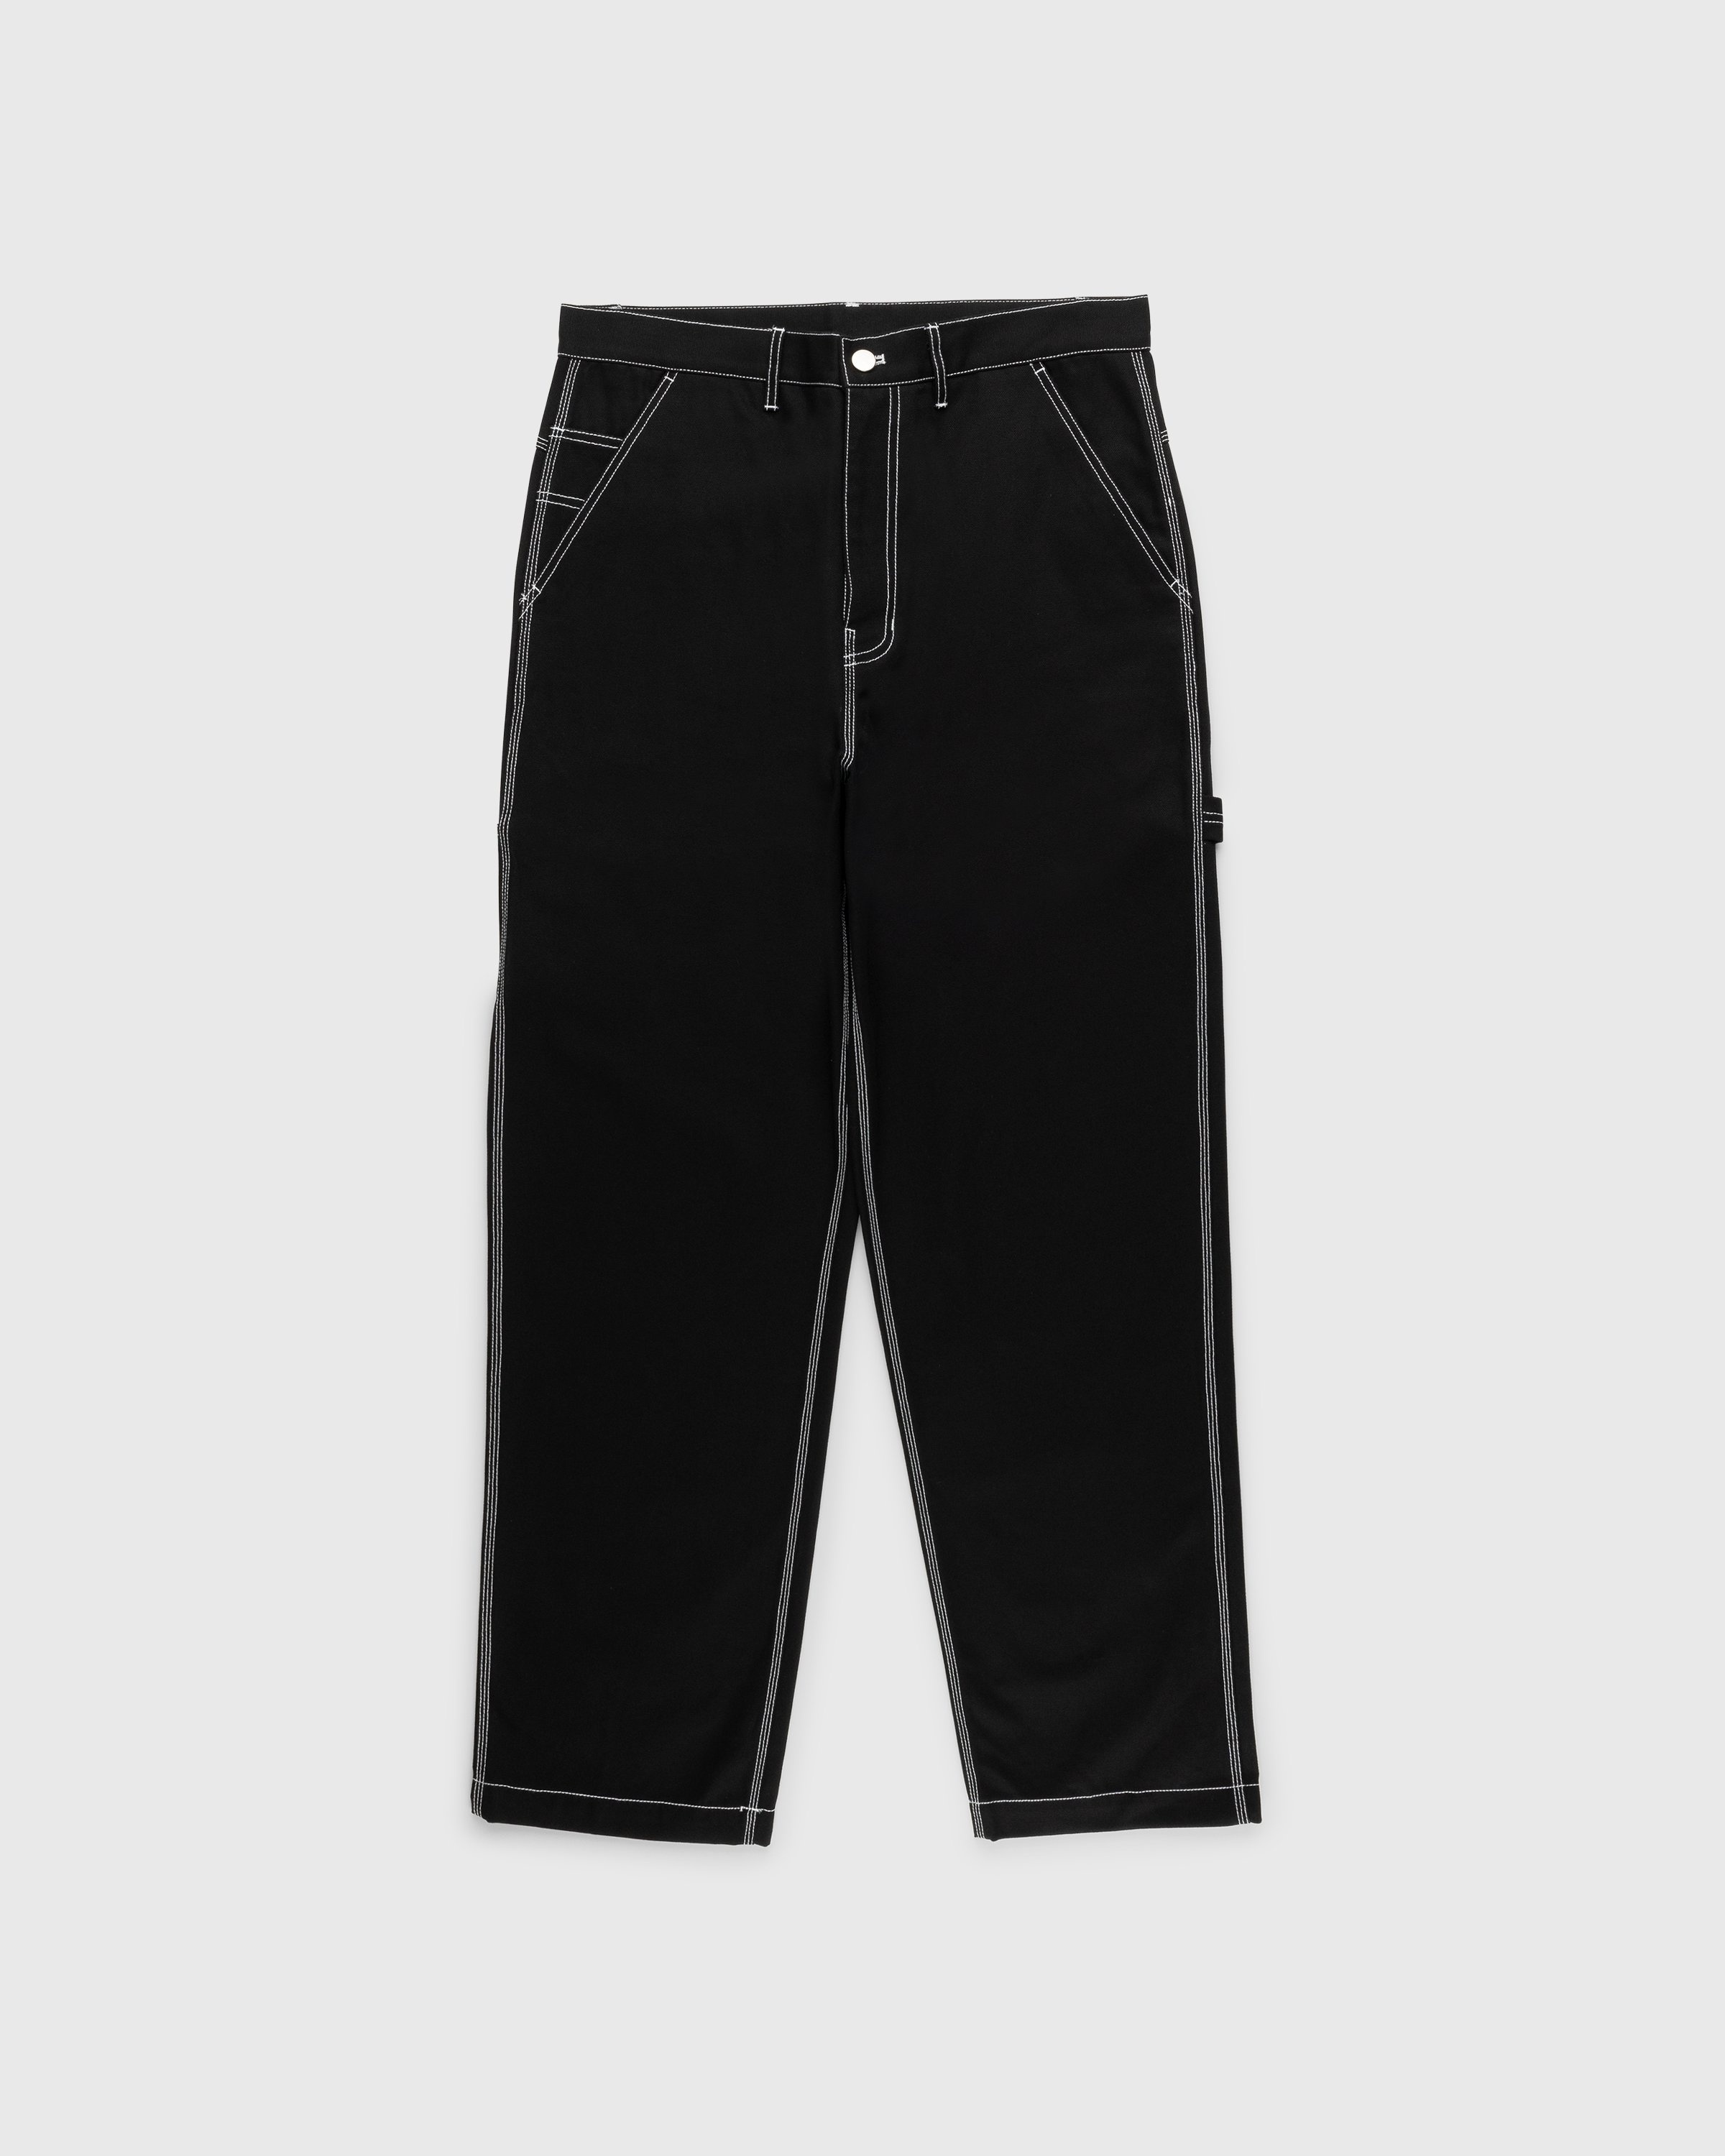 RUF x Highsnobiety – Cotton Work Pants Black - Pants - Black - Image 2